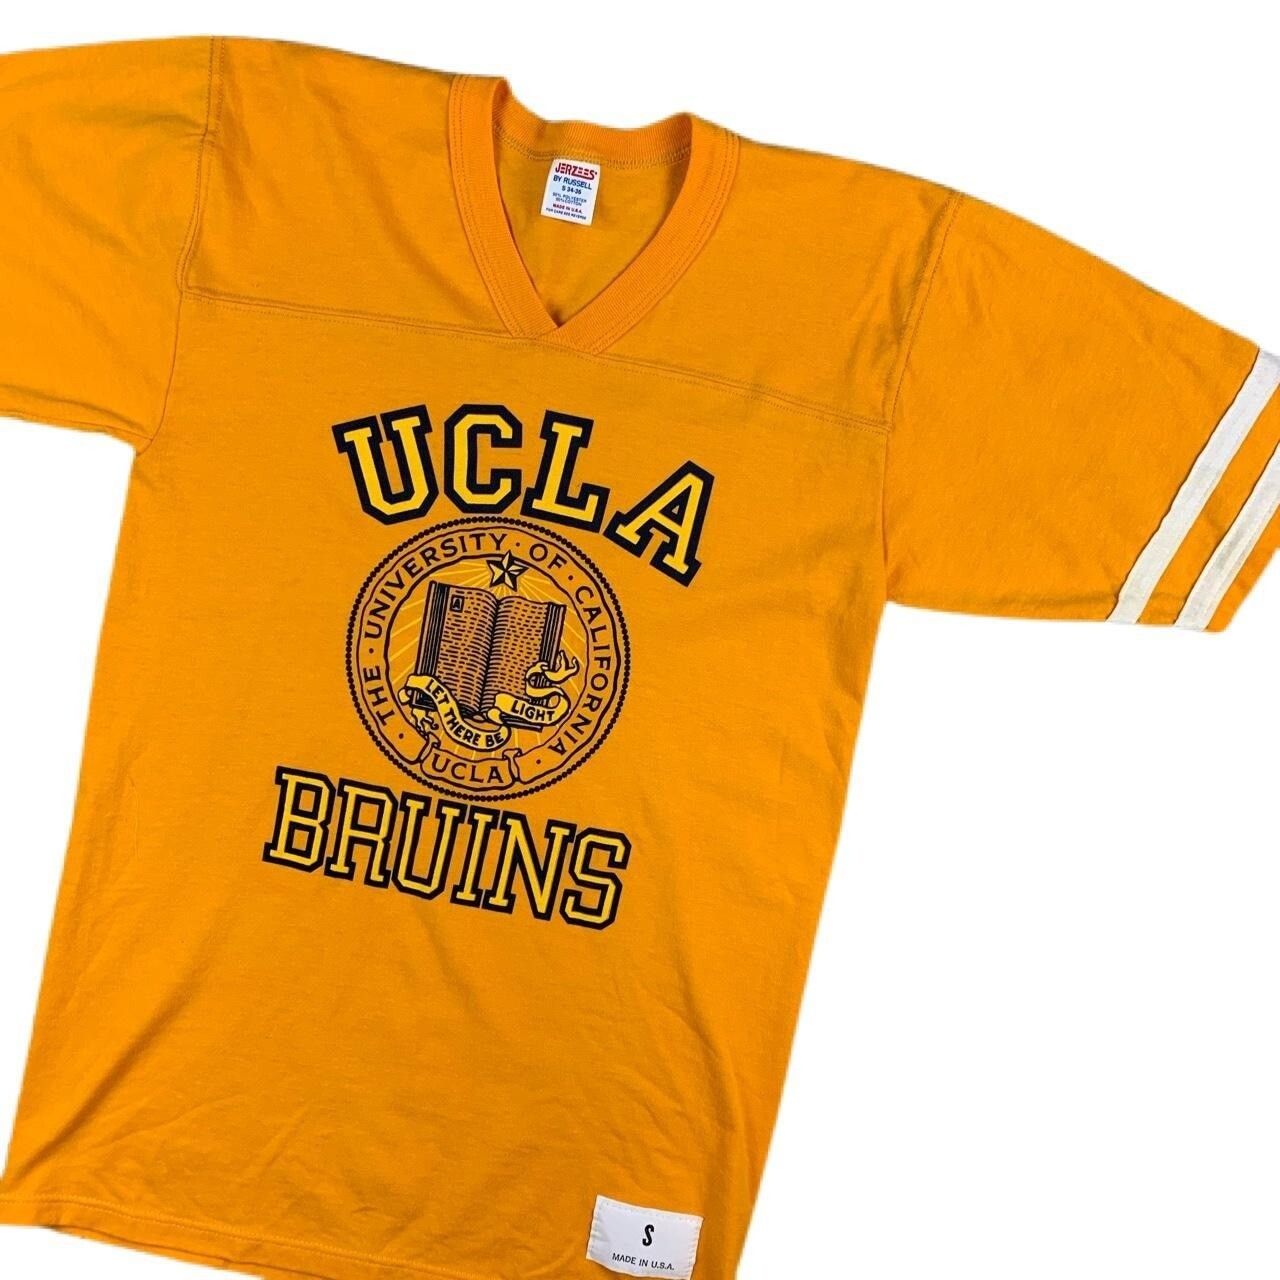 Vintage Vintage 80s Ucla Bruins Bruins Jersey T Shirt Size US S / EU 44-46 / 1 - 1 Preview